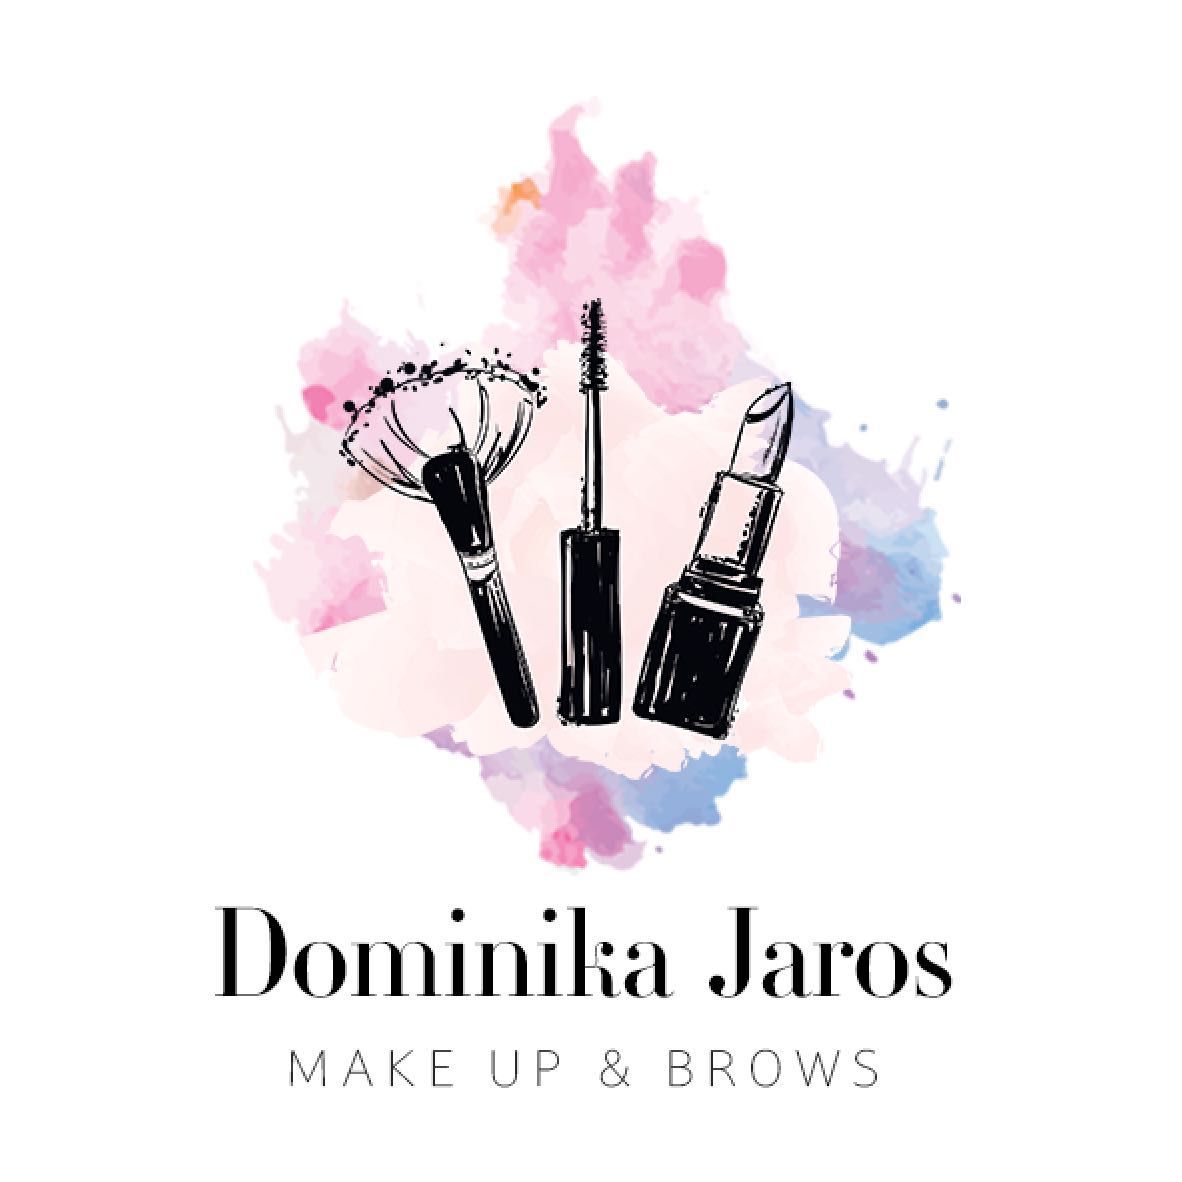 Dominika Jaros Make Up & Brows, 91-362, Łódź, Bałuty